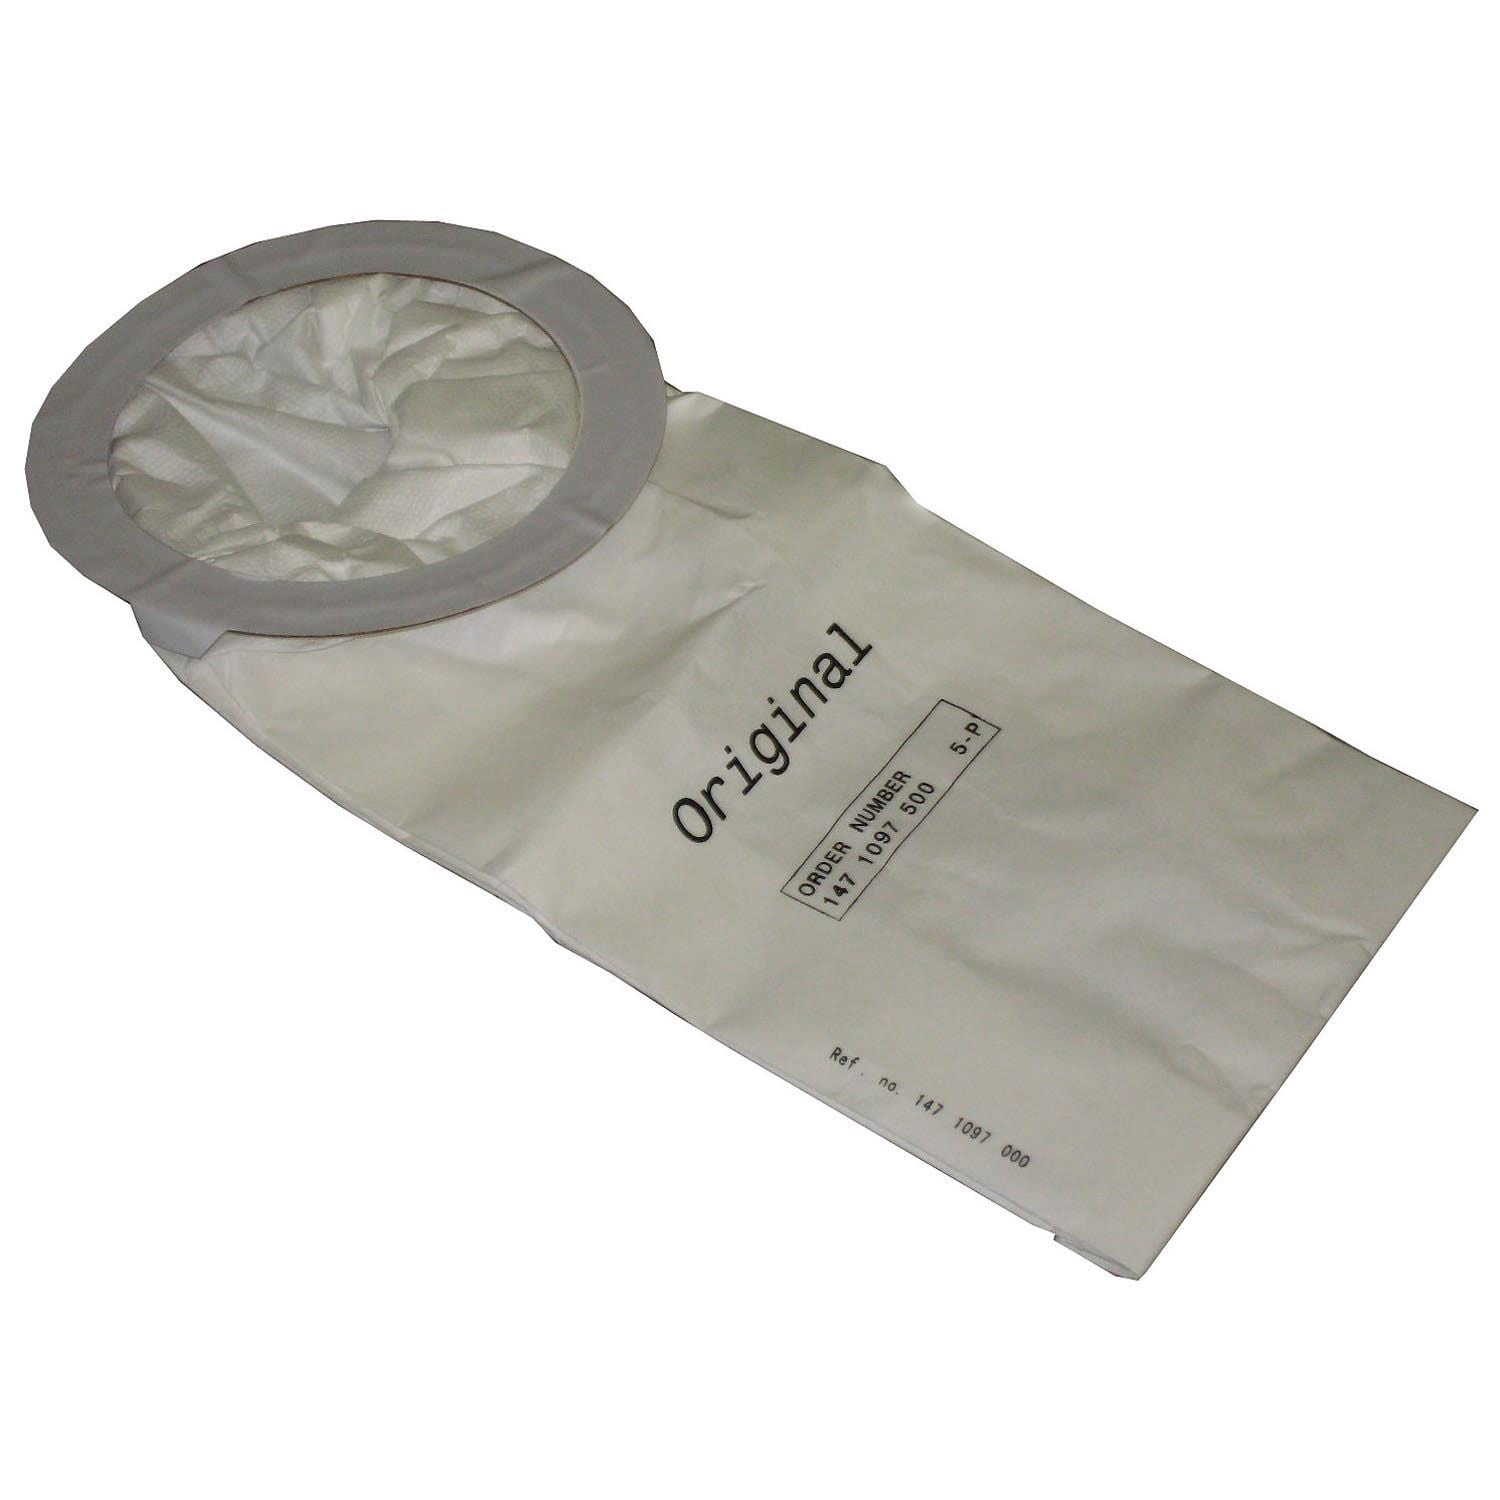 Ufixt Nilfisk Gd110 Vacuum Cleaner Paper Dust Bags 